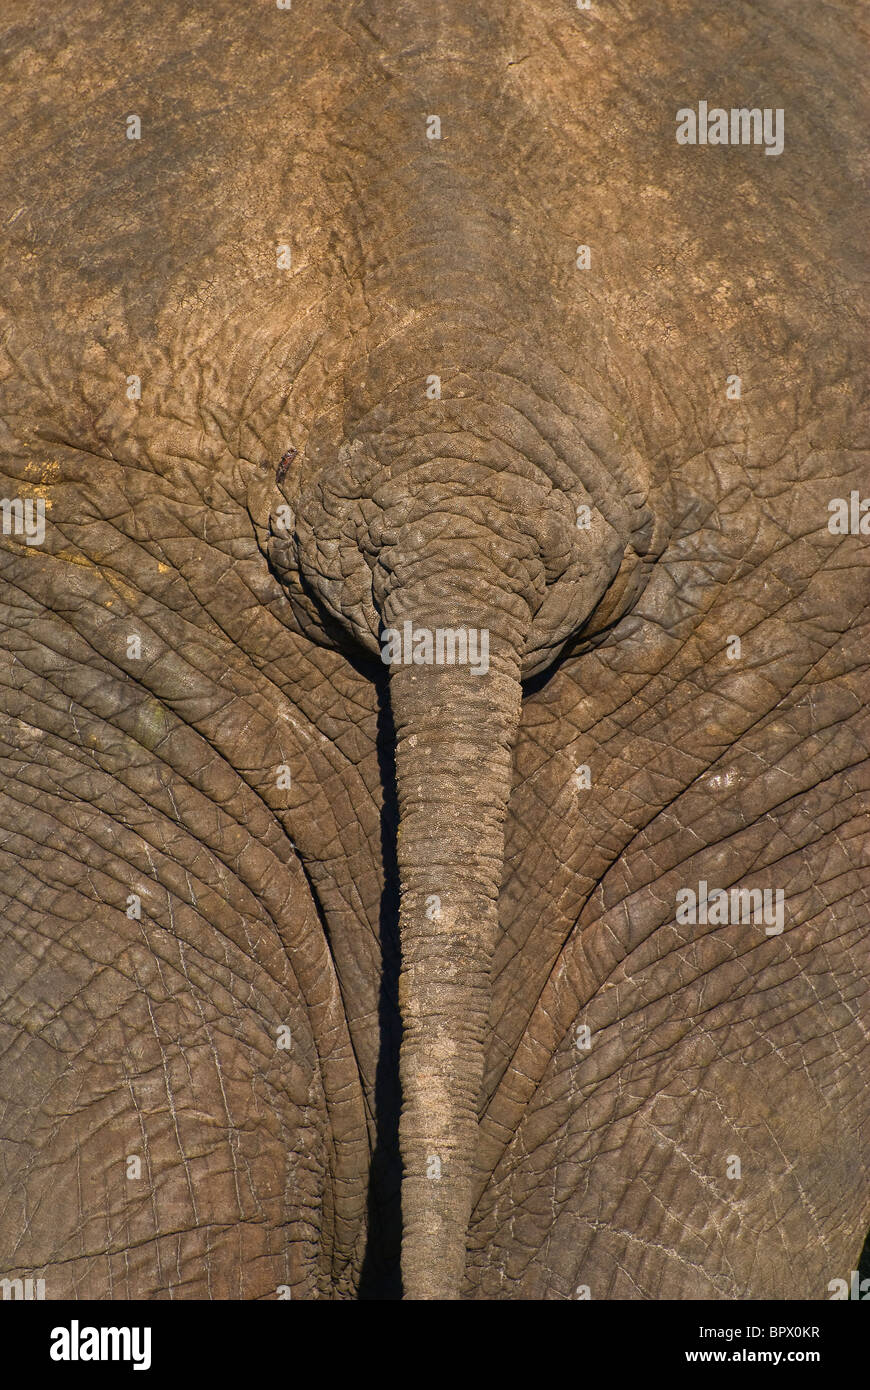 Elephant (Loxodonta africana) - detail of elephant skin, bum and tail - May, Chobe National Park, Botswana, Southern Africa Stock Photo